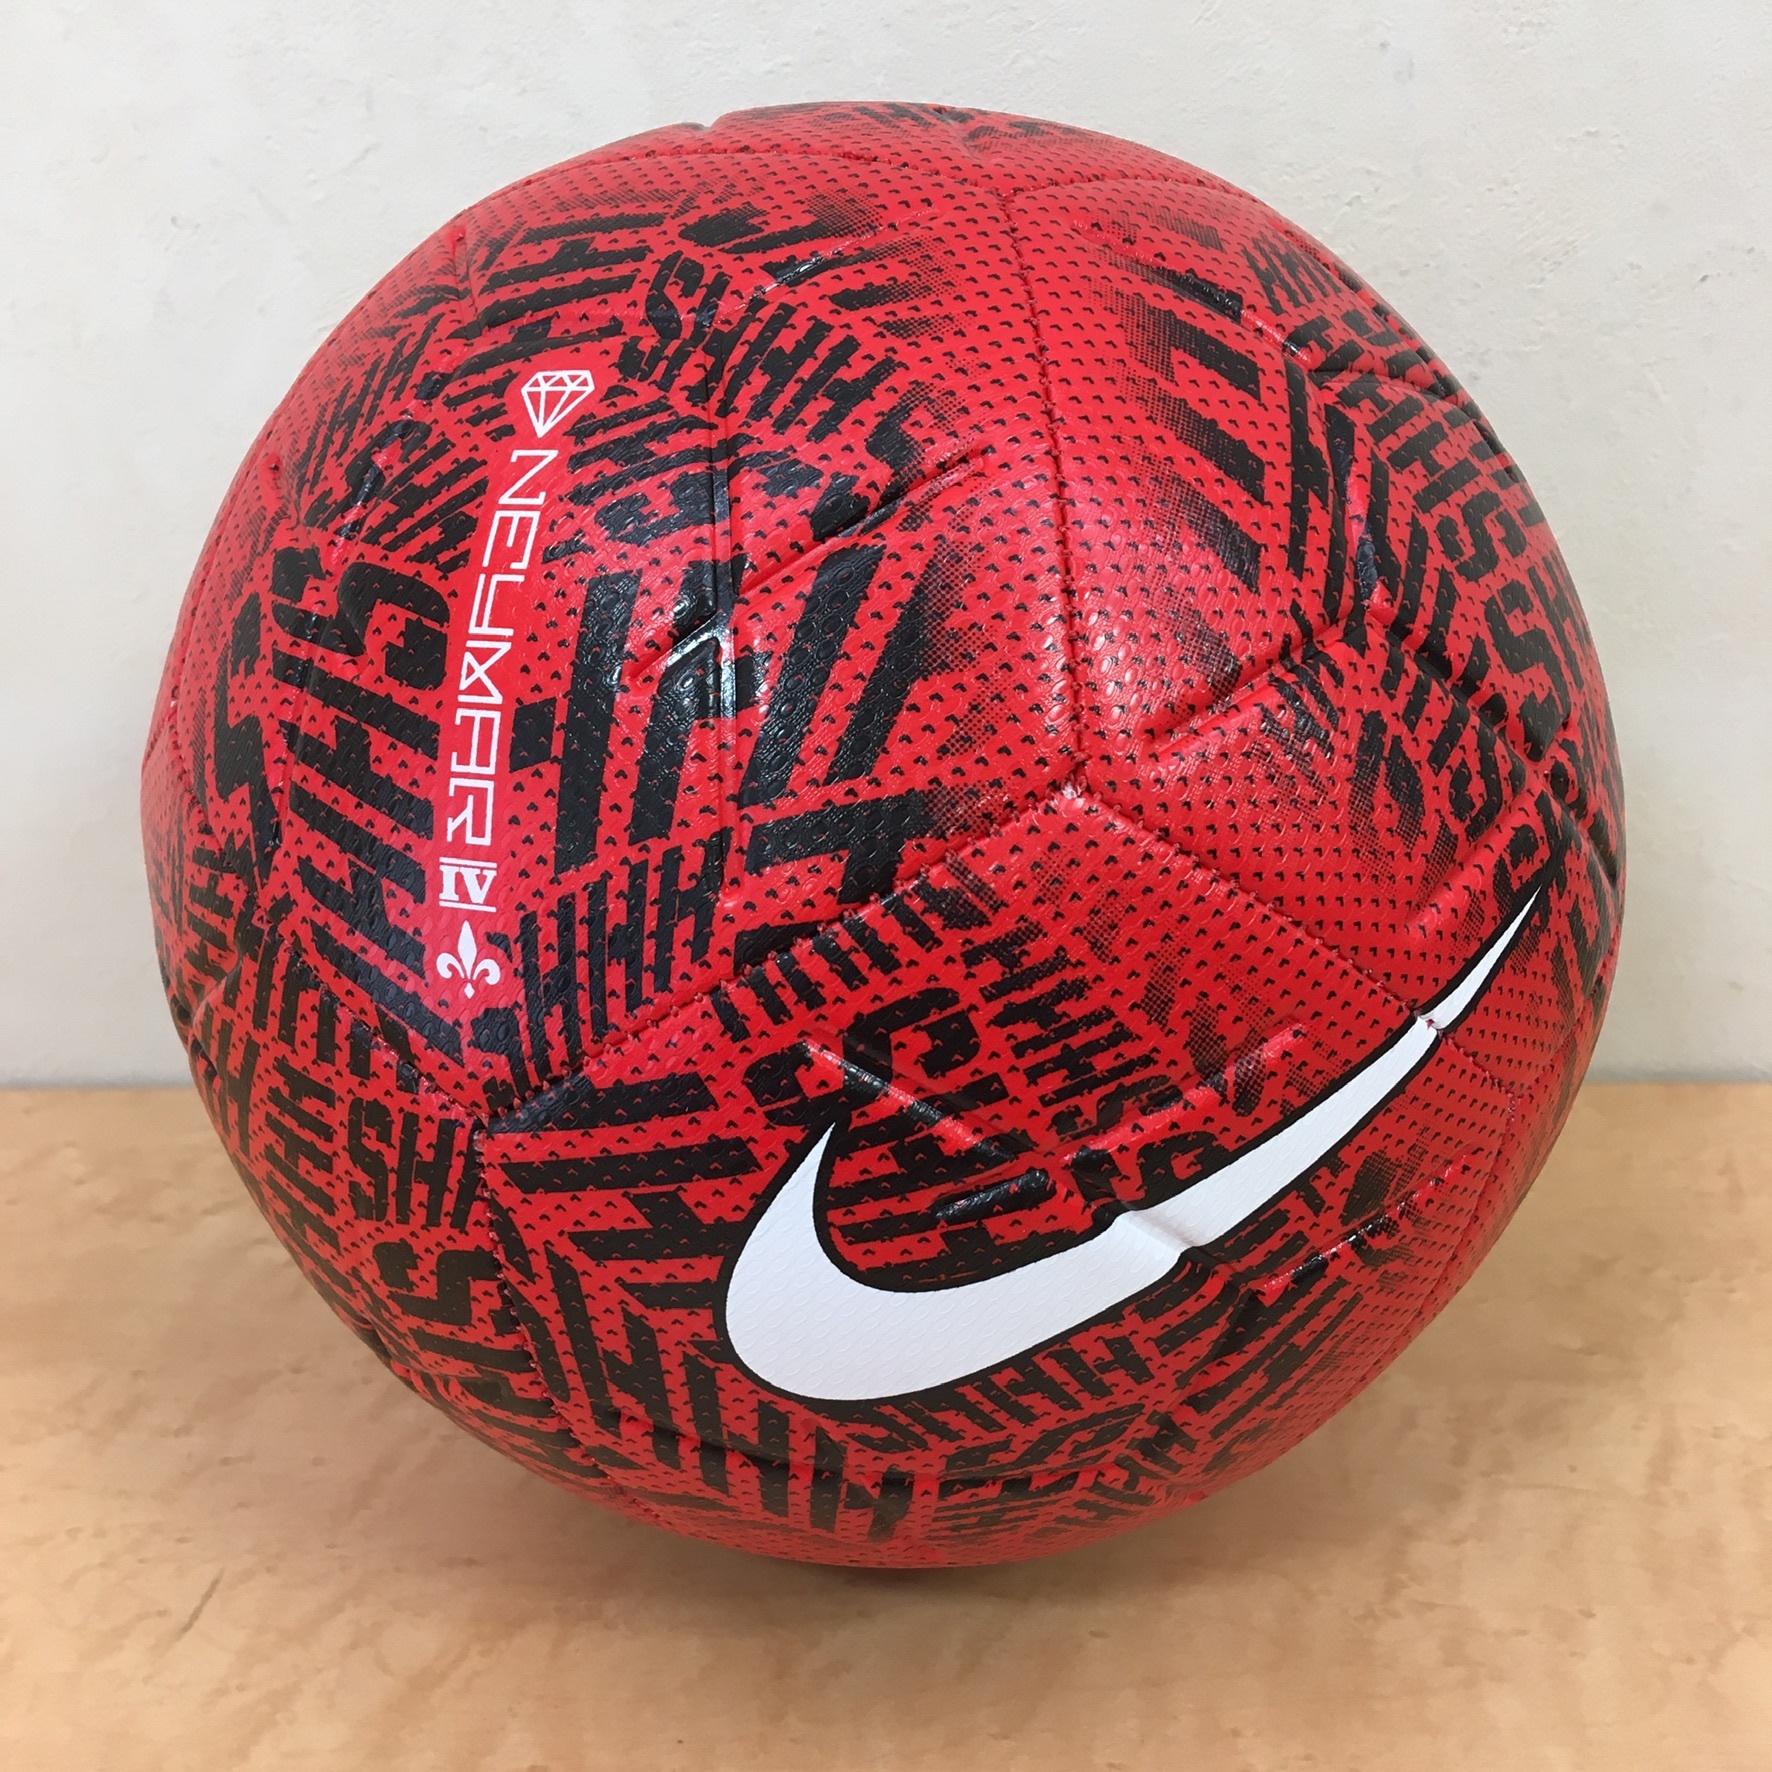 Nike ナイキ Neymar ネイマール Shhh ストライク 5号球 チャレンジレッド Freak スポーツウェア通販 海外ブランド 日本国内未入荷 海外直輸入